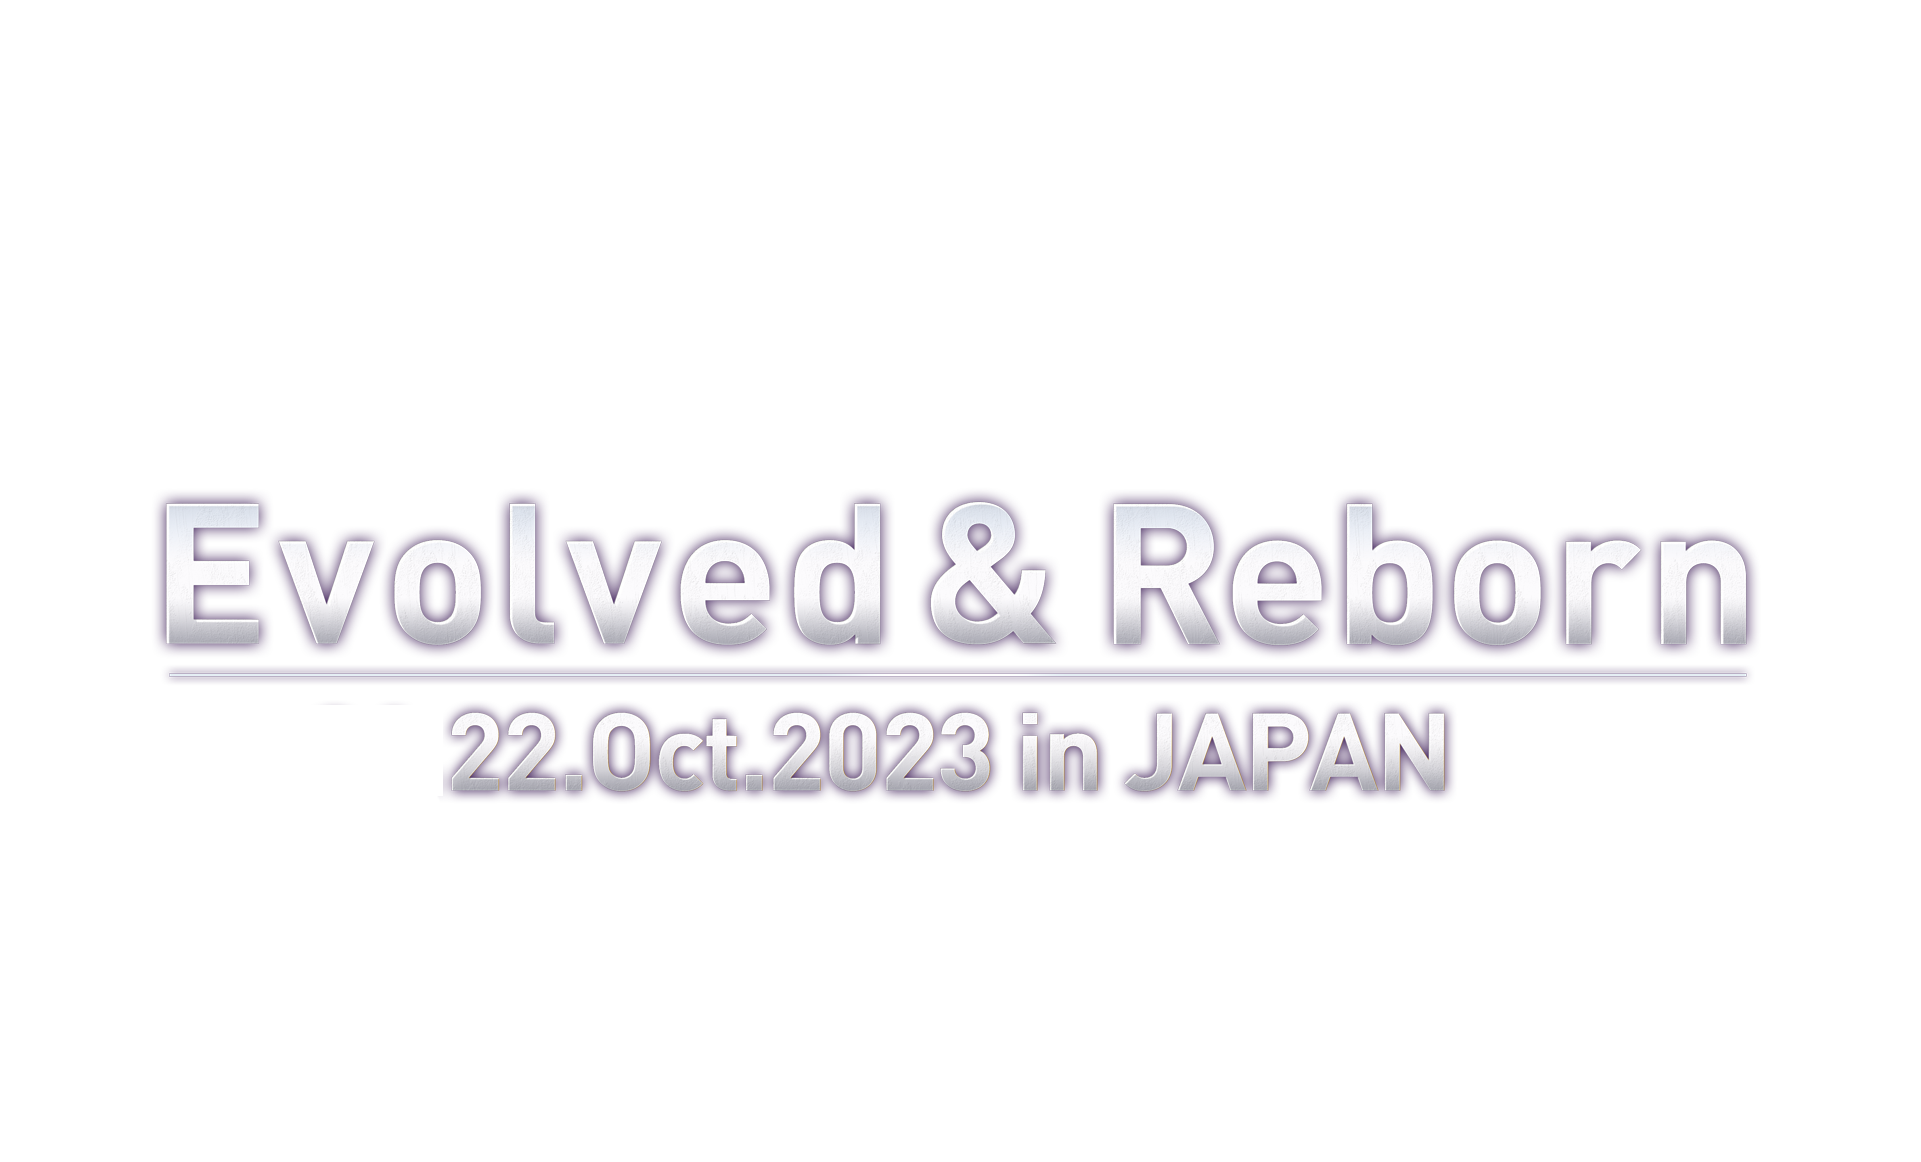 Evolved & Reborn 2023 Autumn